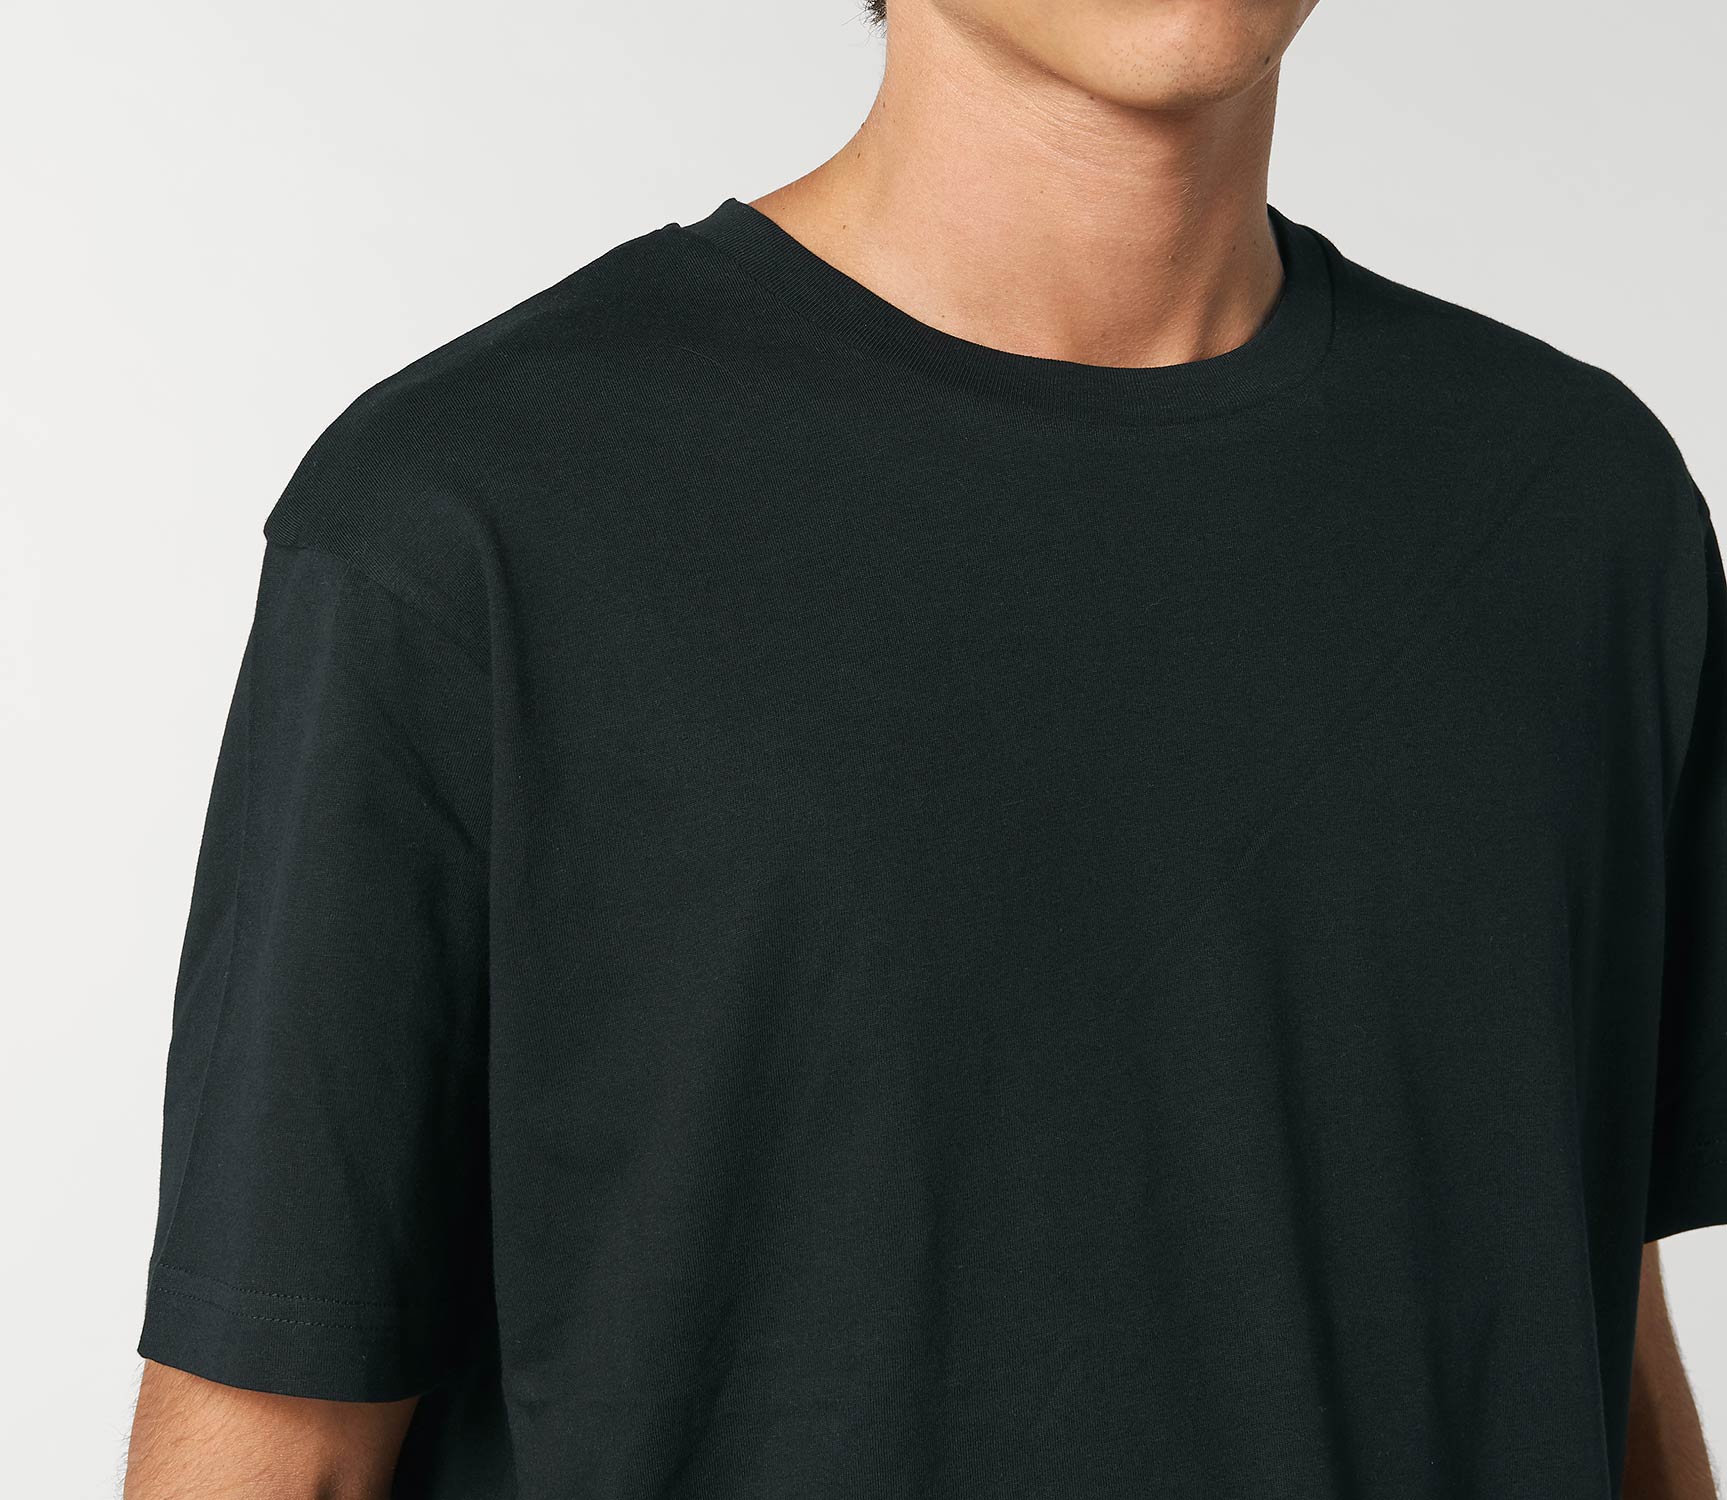 Veganes Oversize T-Shirt in schwarz im 2er-Pack